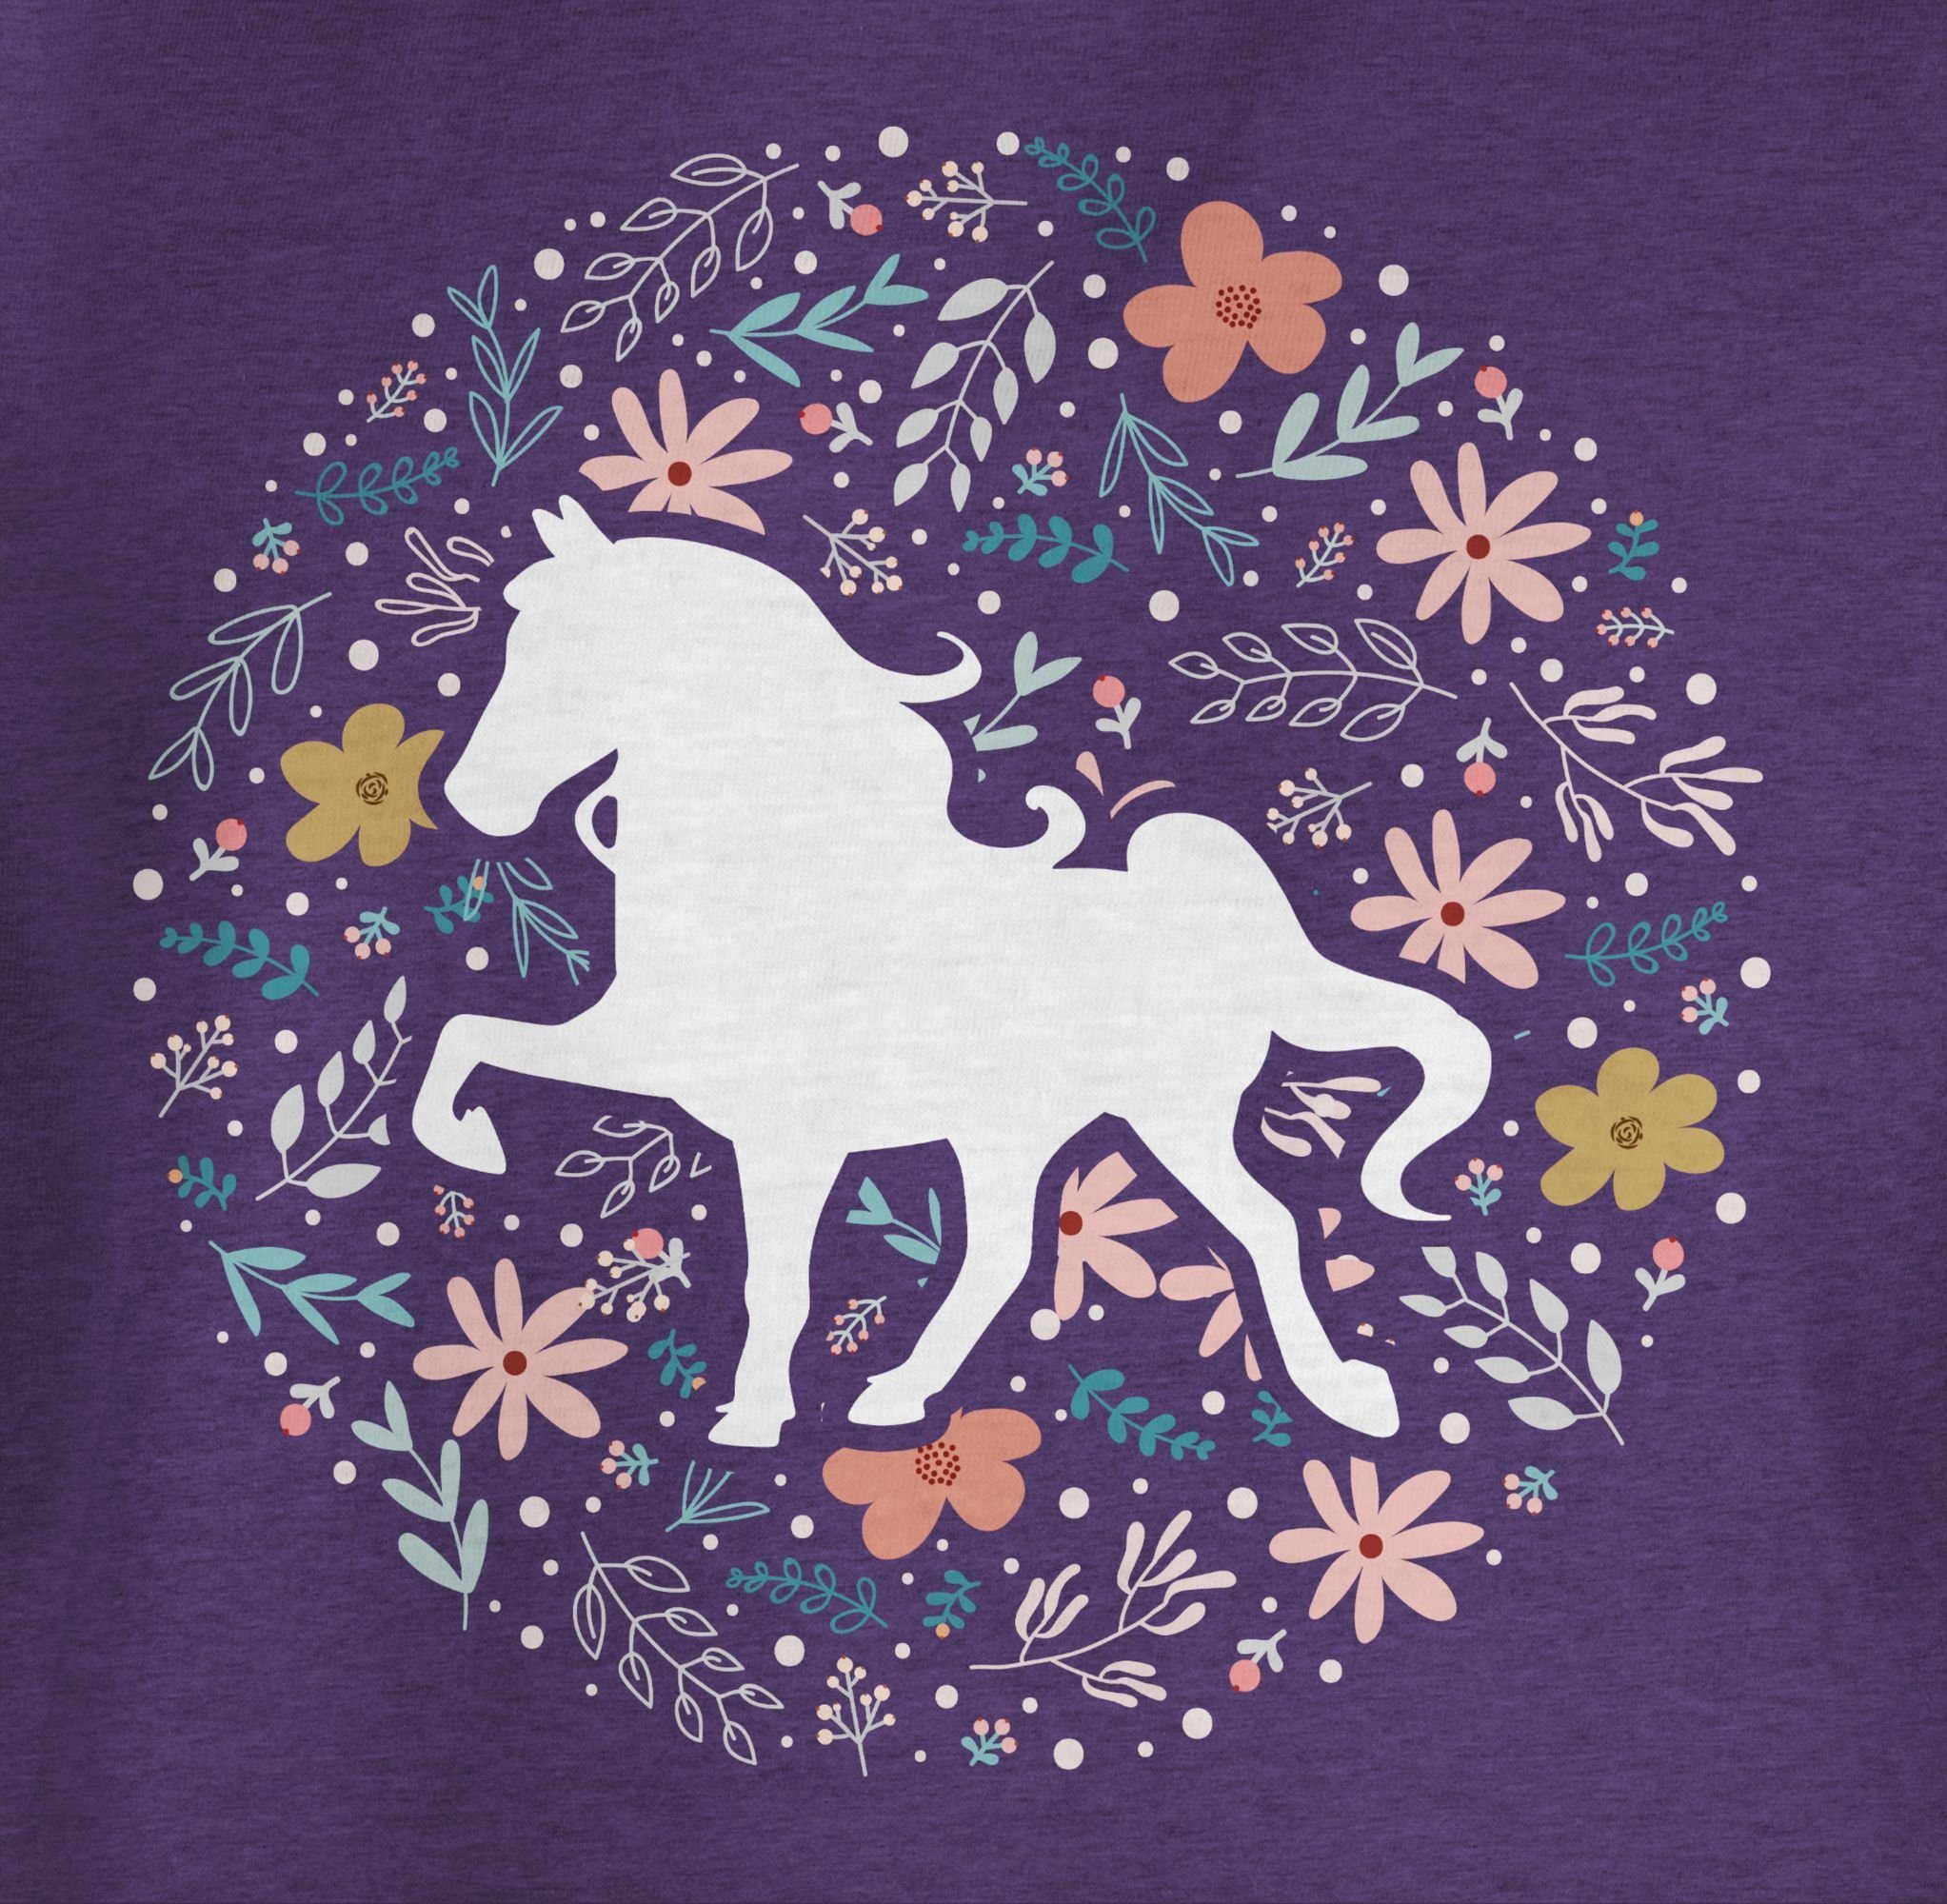 Pferd Pferd mit 3 Shirtracer Meliert Blumen Lila T-Shirt